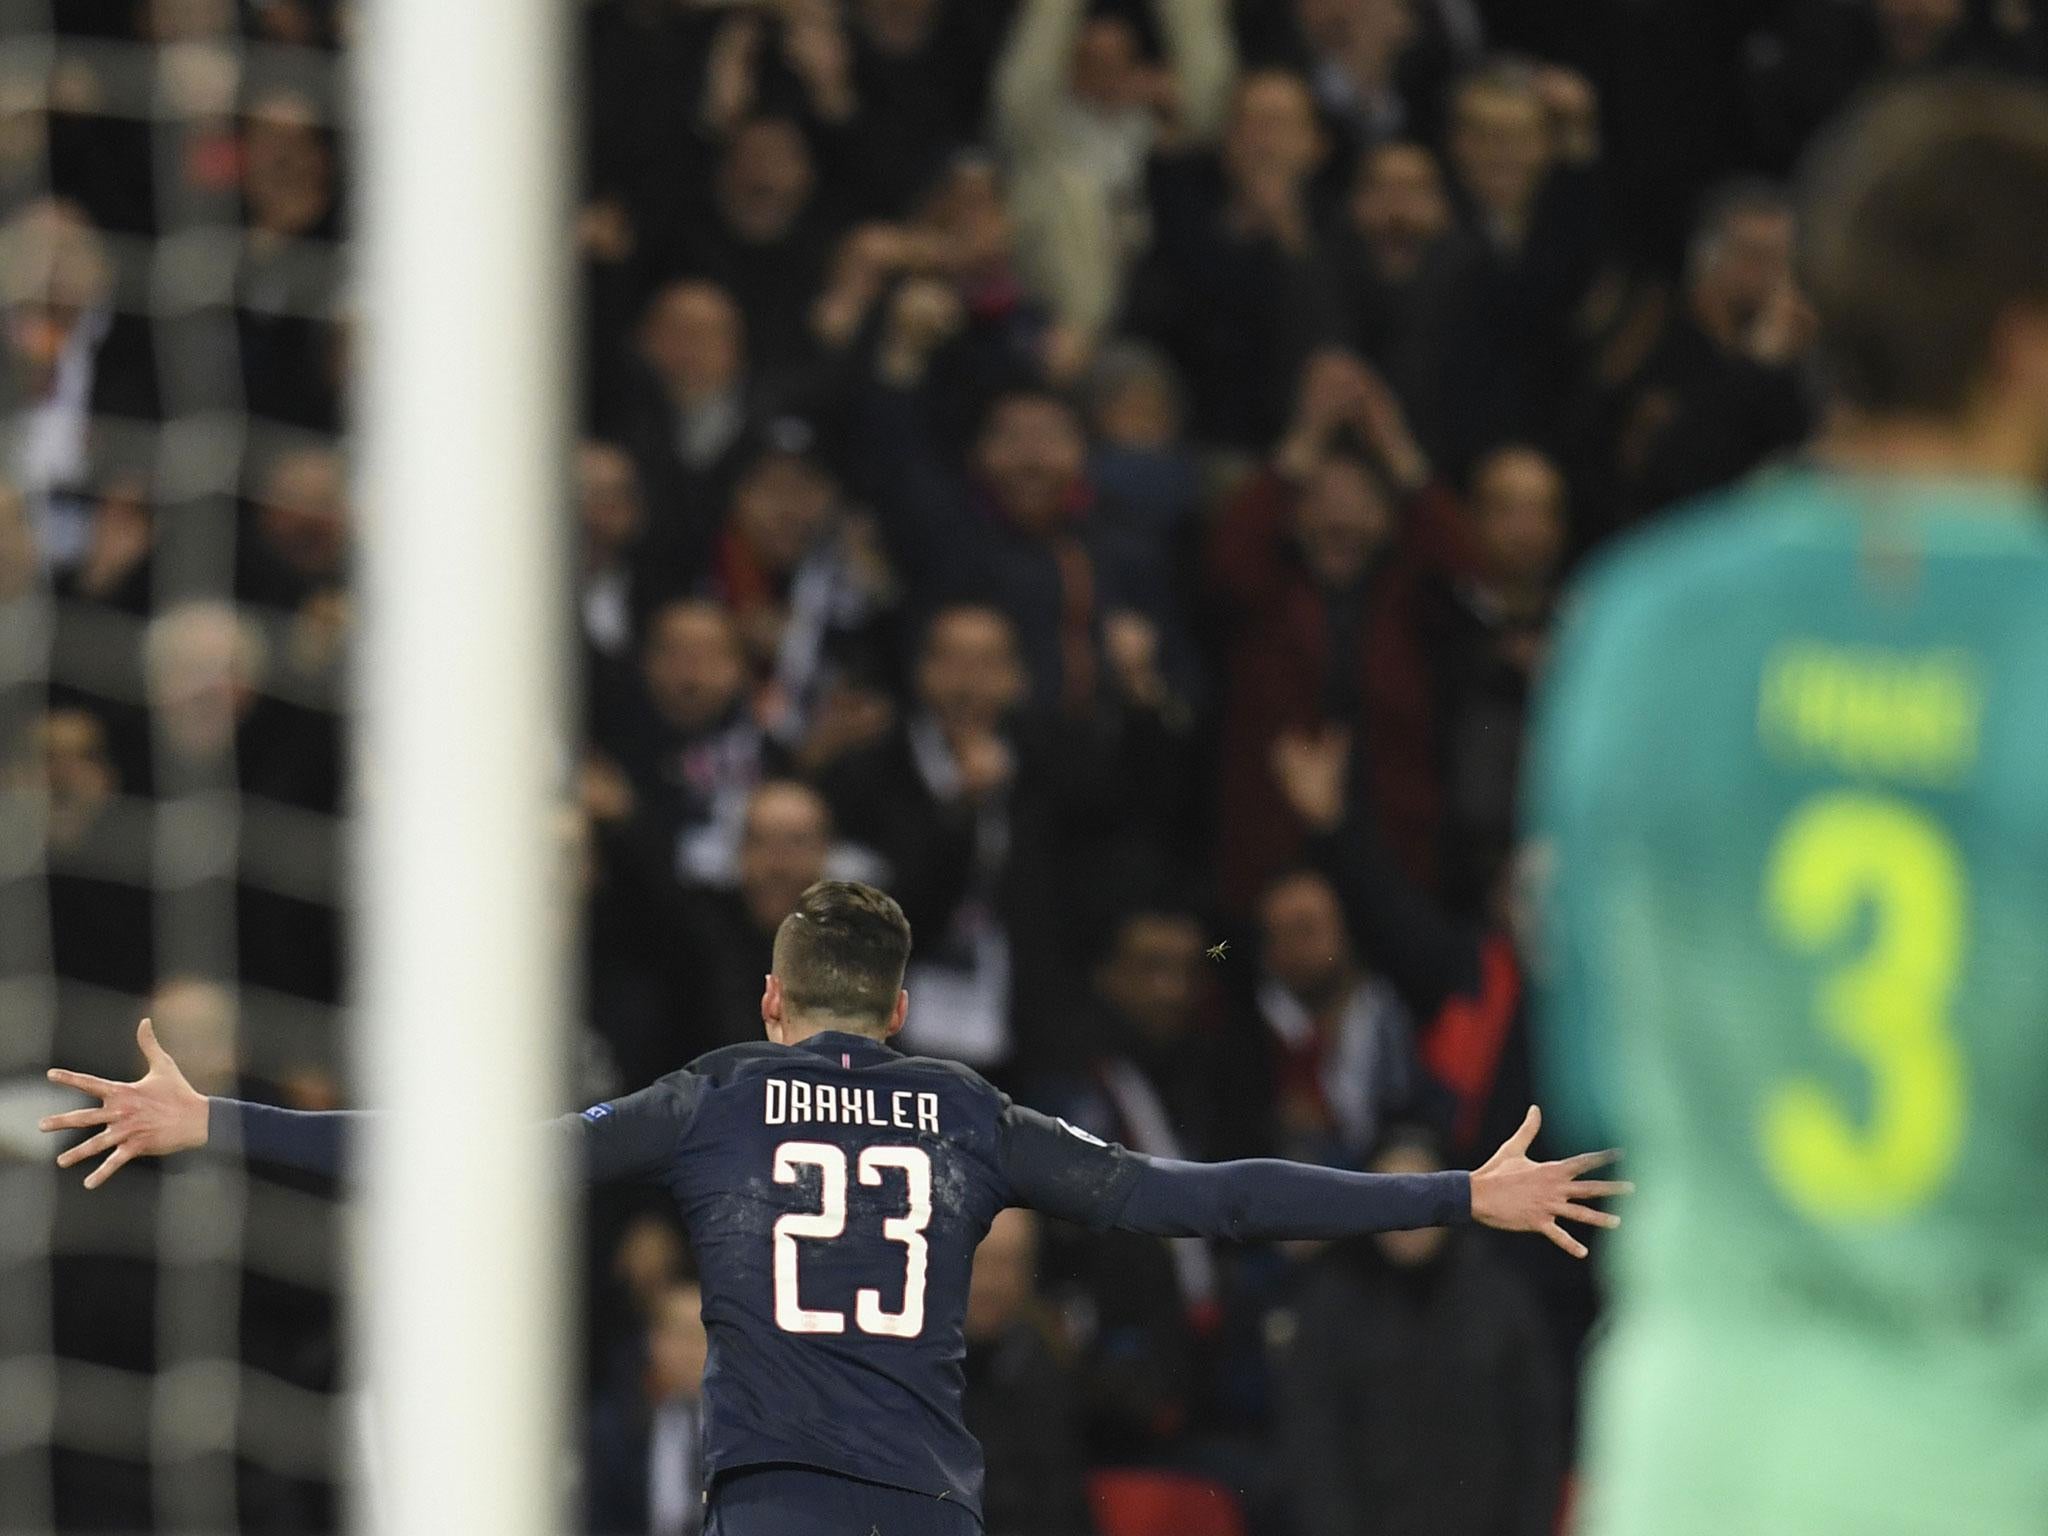 Draxler wheels away in celebration after scoring PSG's second